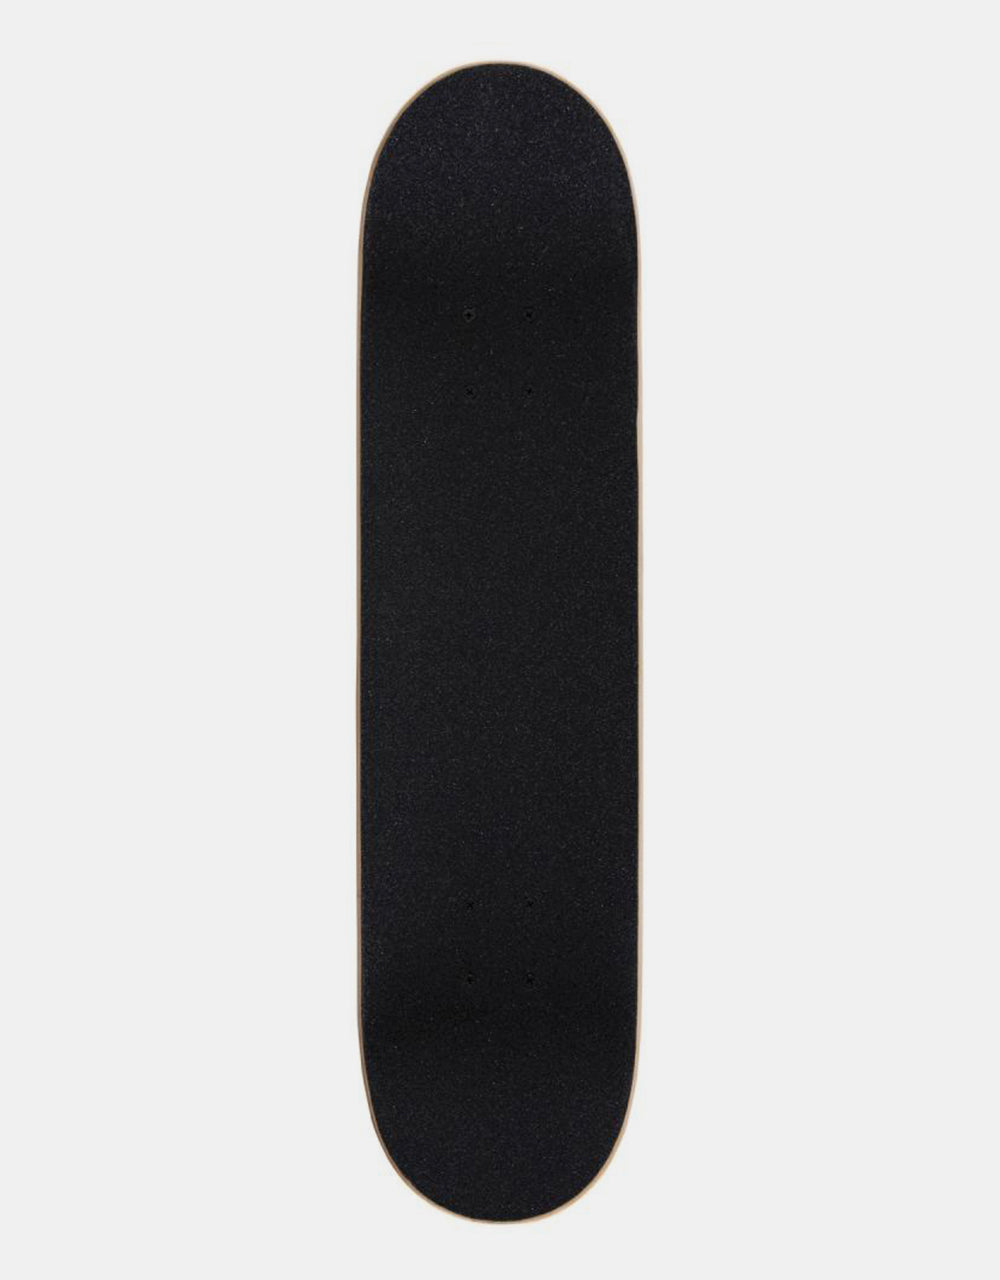 Tony Hawk 360 TH Emblem Complete Skateboard - 7.75"